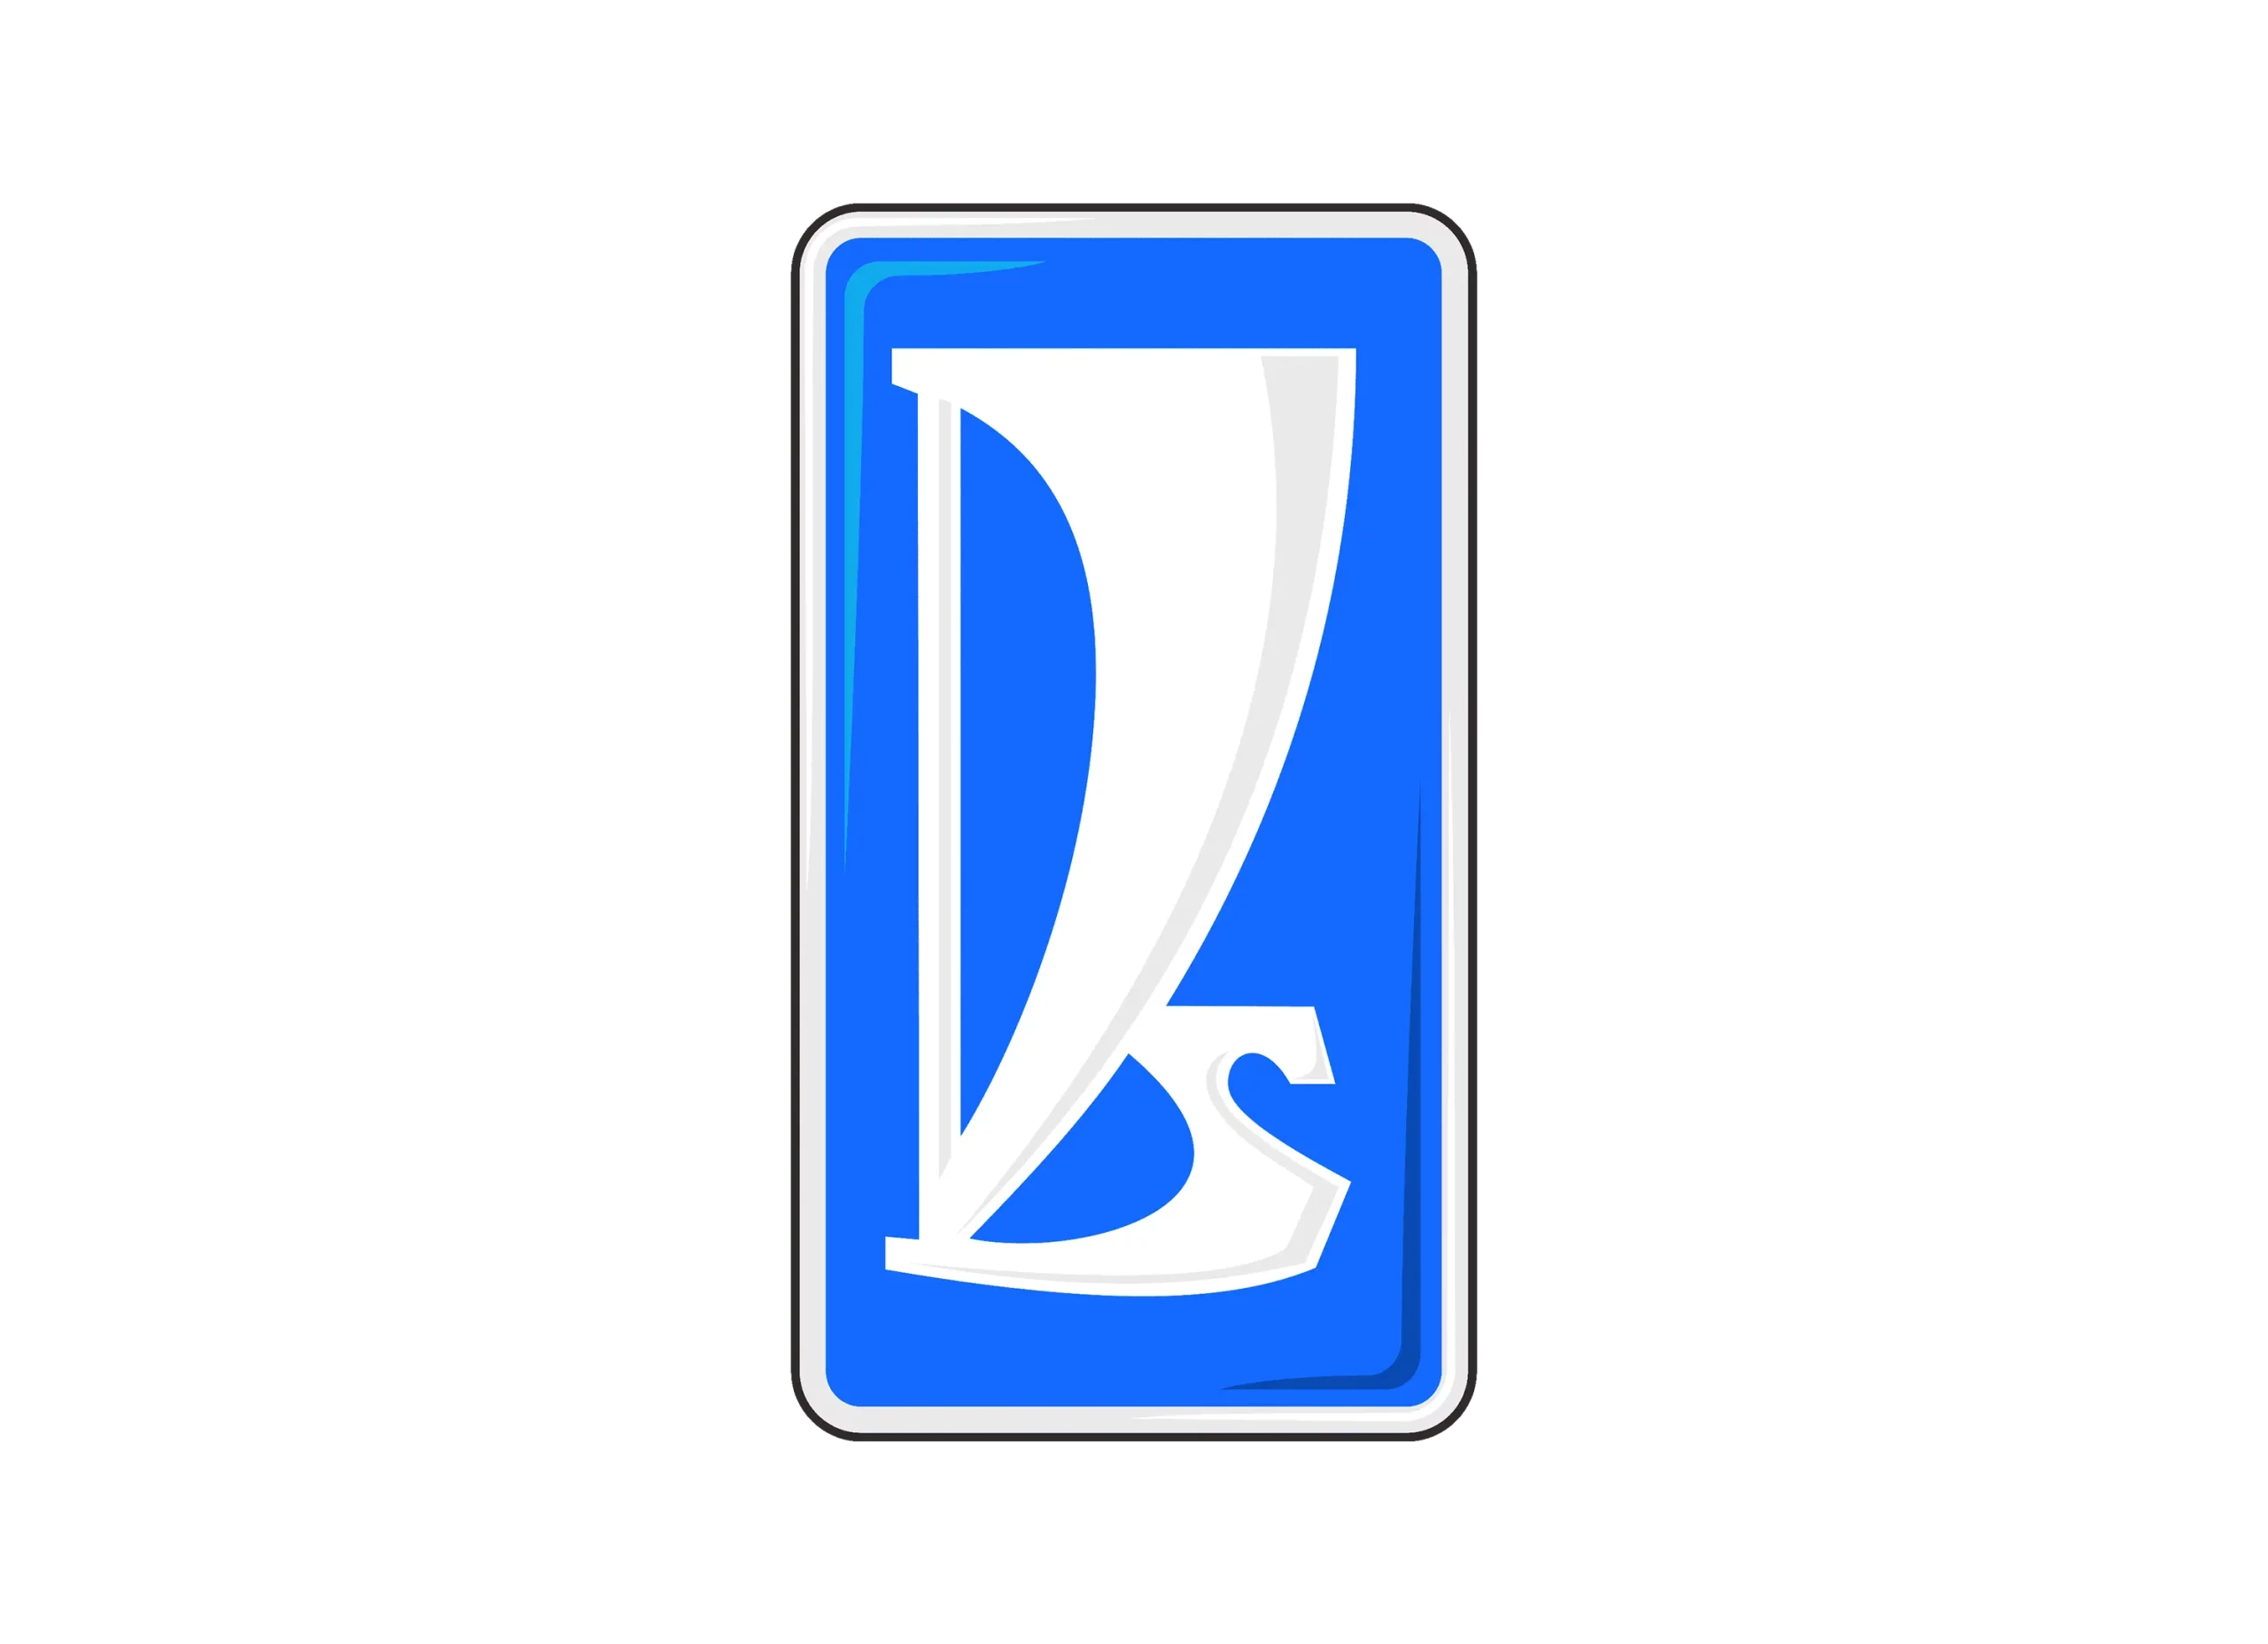 Lada logo 1985-1993